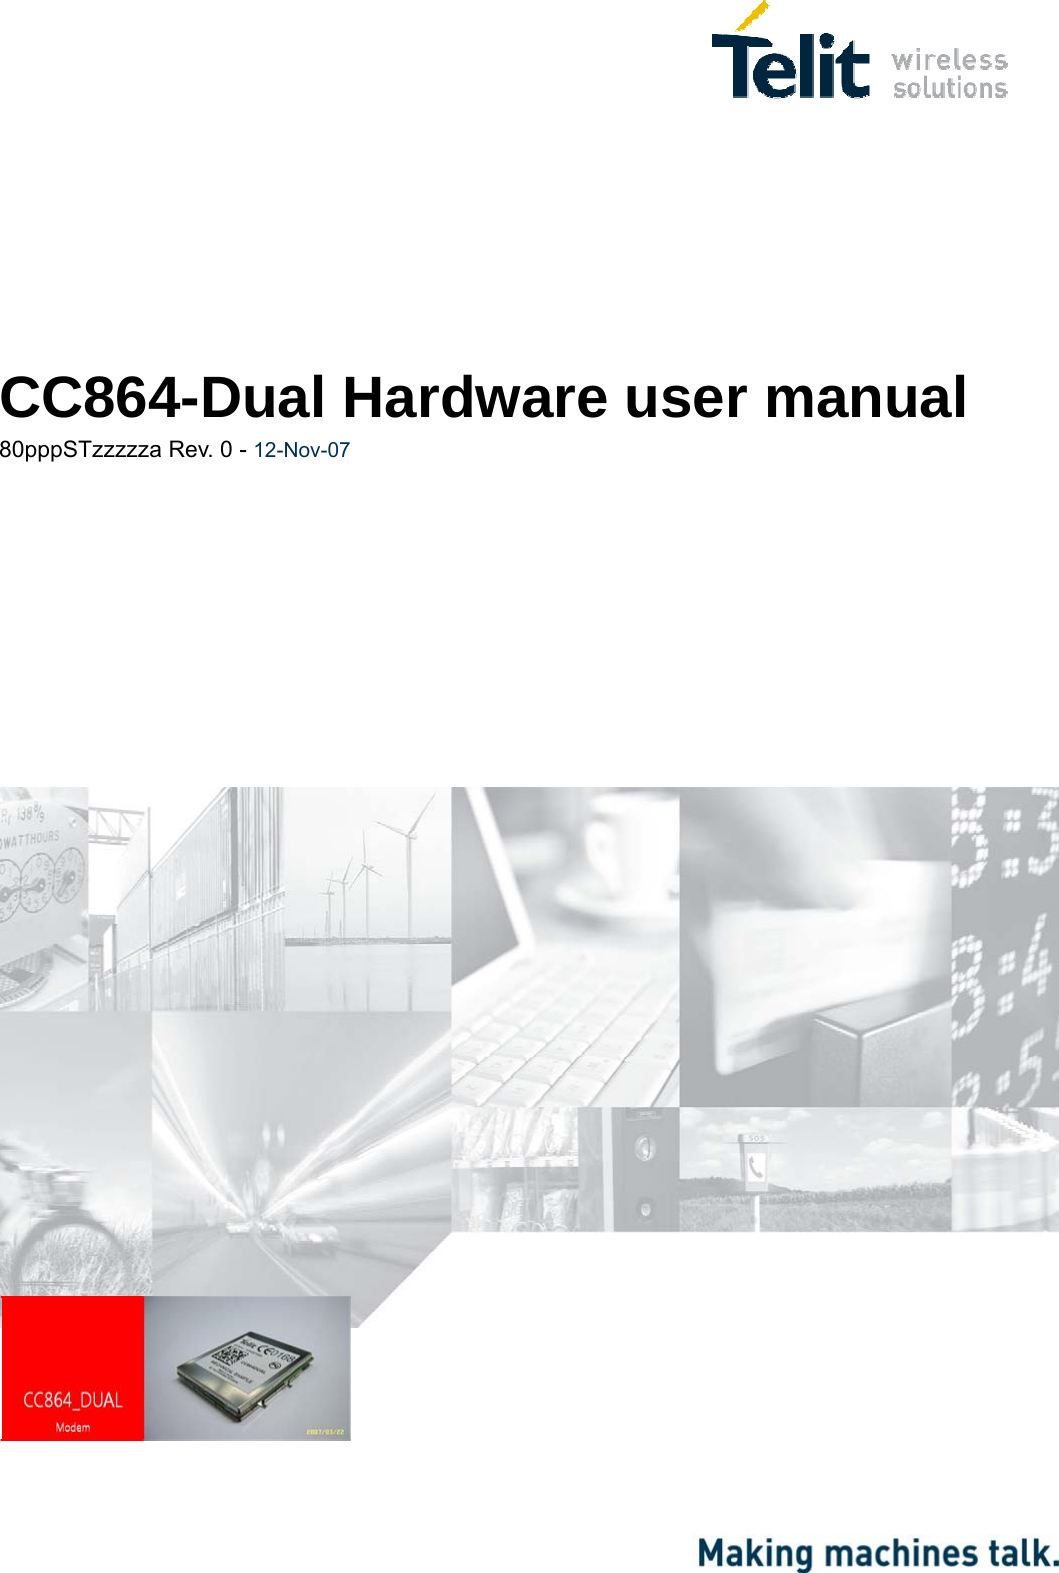          CC864-Dual Hardware user manual   80pppSTzzzzza Rev. 0 - 12-Nov-07                        